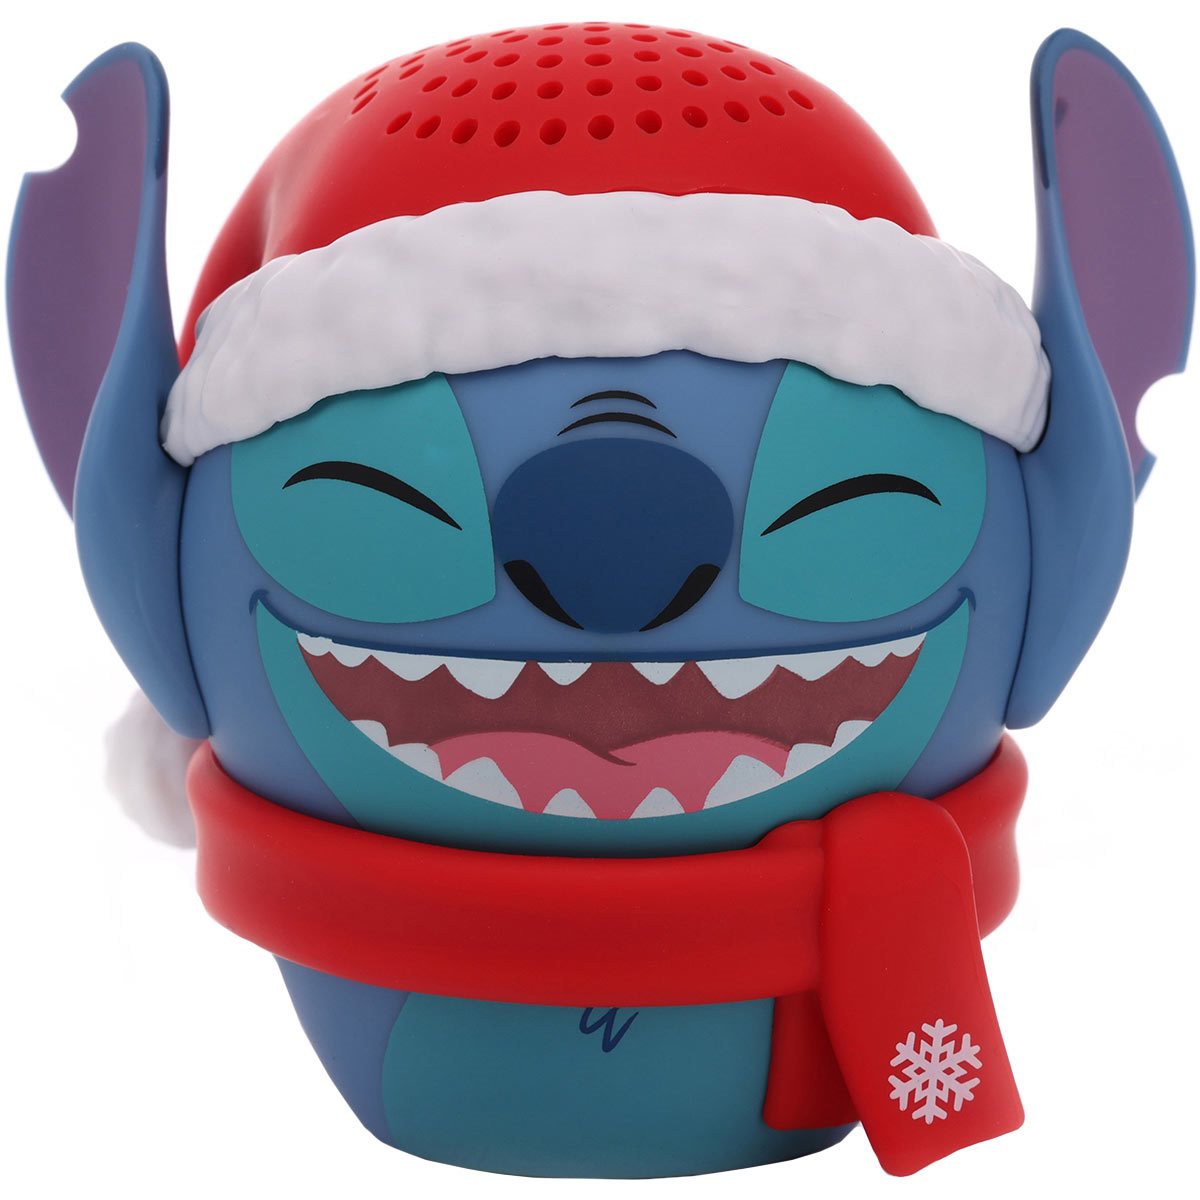 Disney Stitch Holiday Mini-Figurine